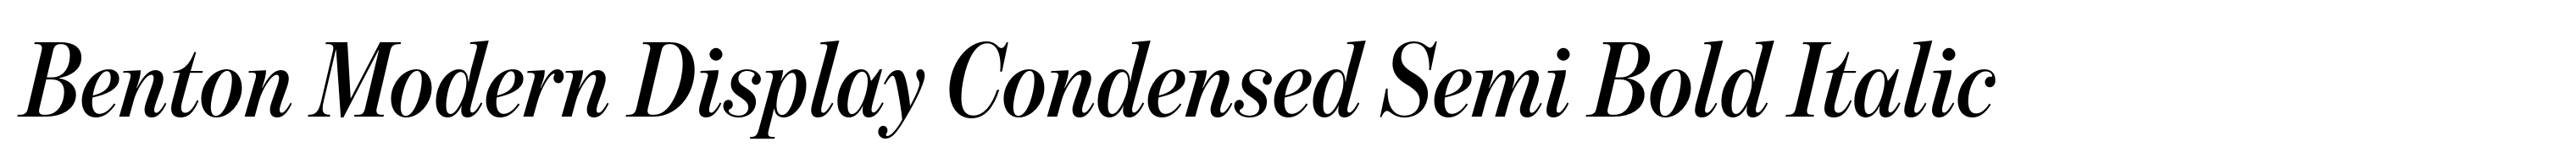 Benton Modern Display Condensed Semi Bold Italic